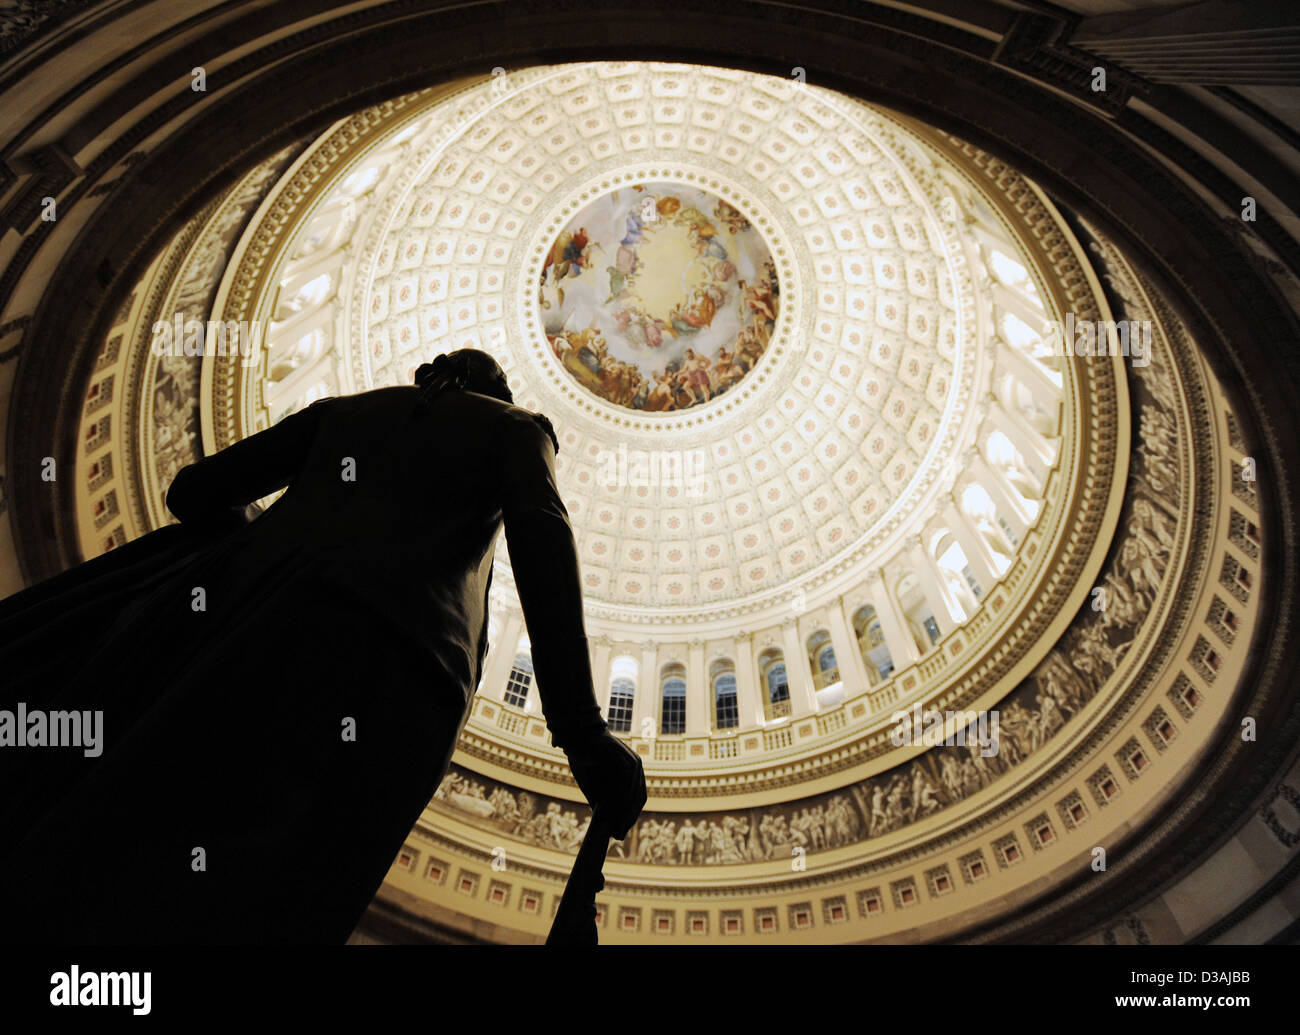 George Washington-Statue in der Rotunde des US Capitol Washington D.C., Stockfoto